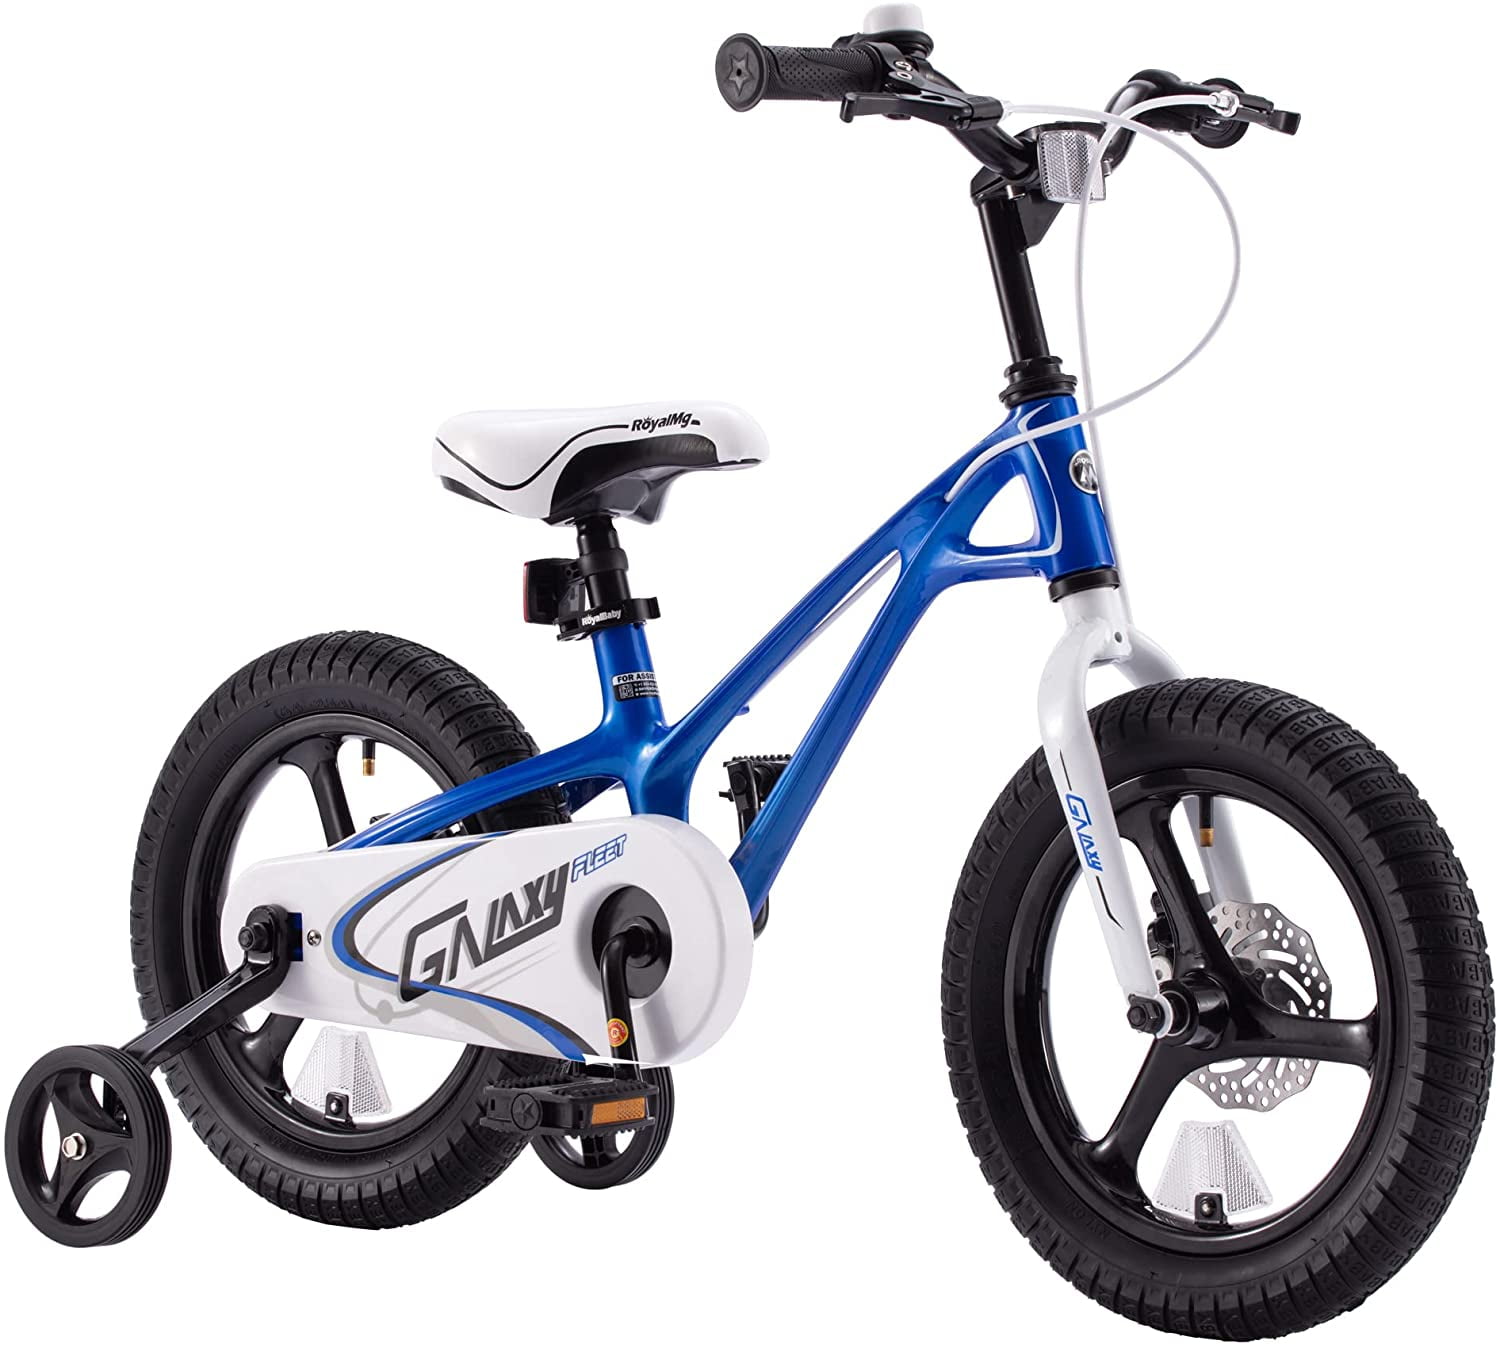 Kids 16 inch Mountain Bike Magnesium alloy frame Children bicycle FREE HELMET 